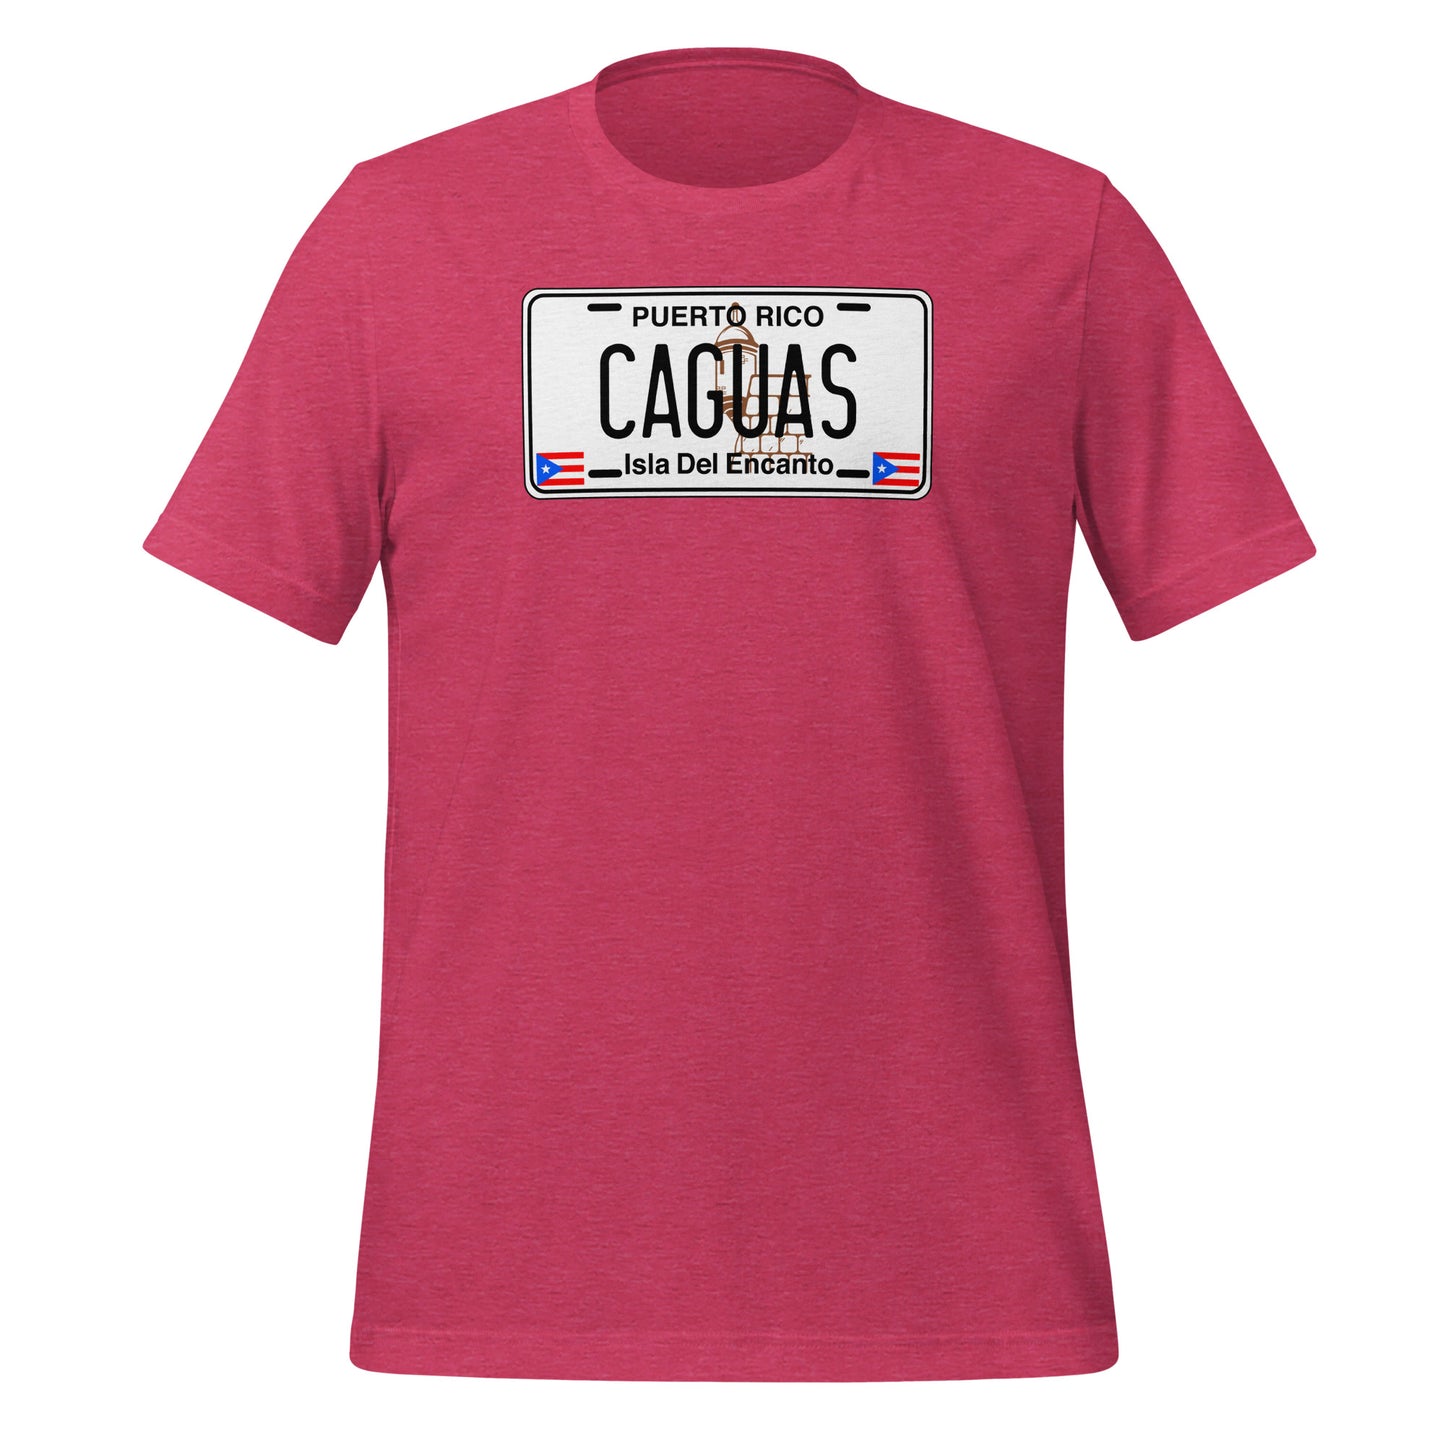 Caguas Puerto Rico License Plate Unisex T-Shirt